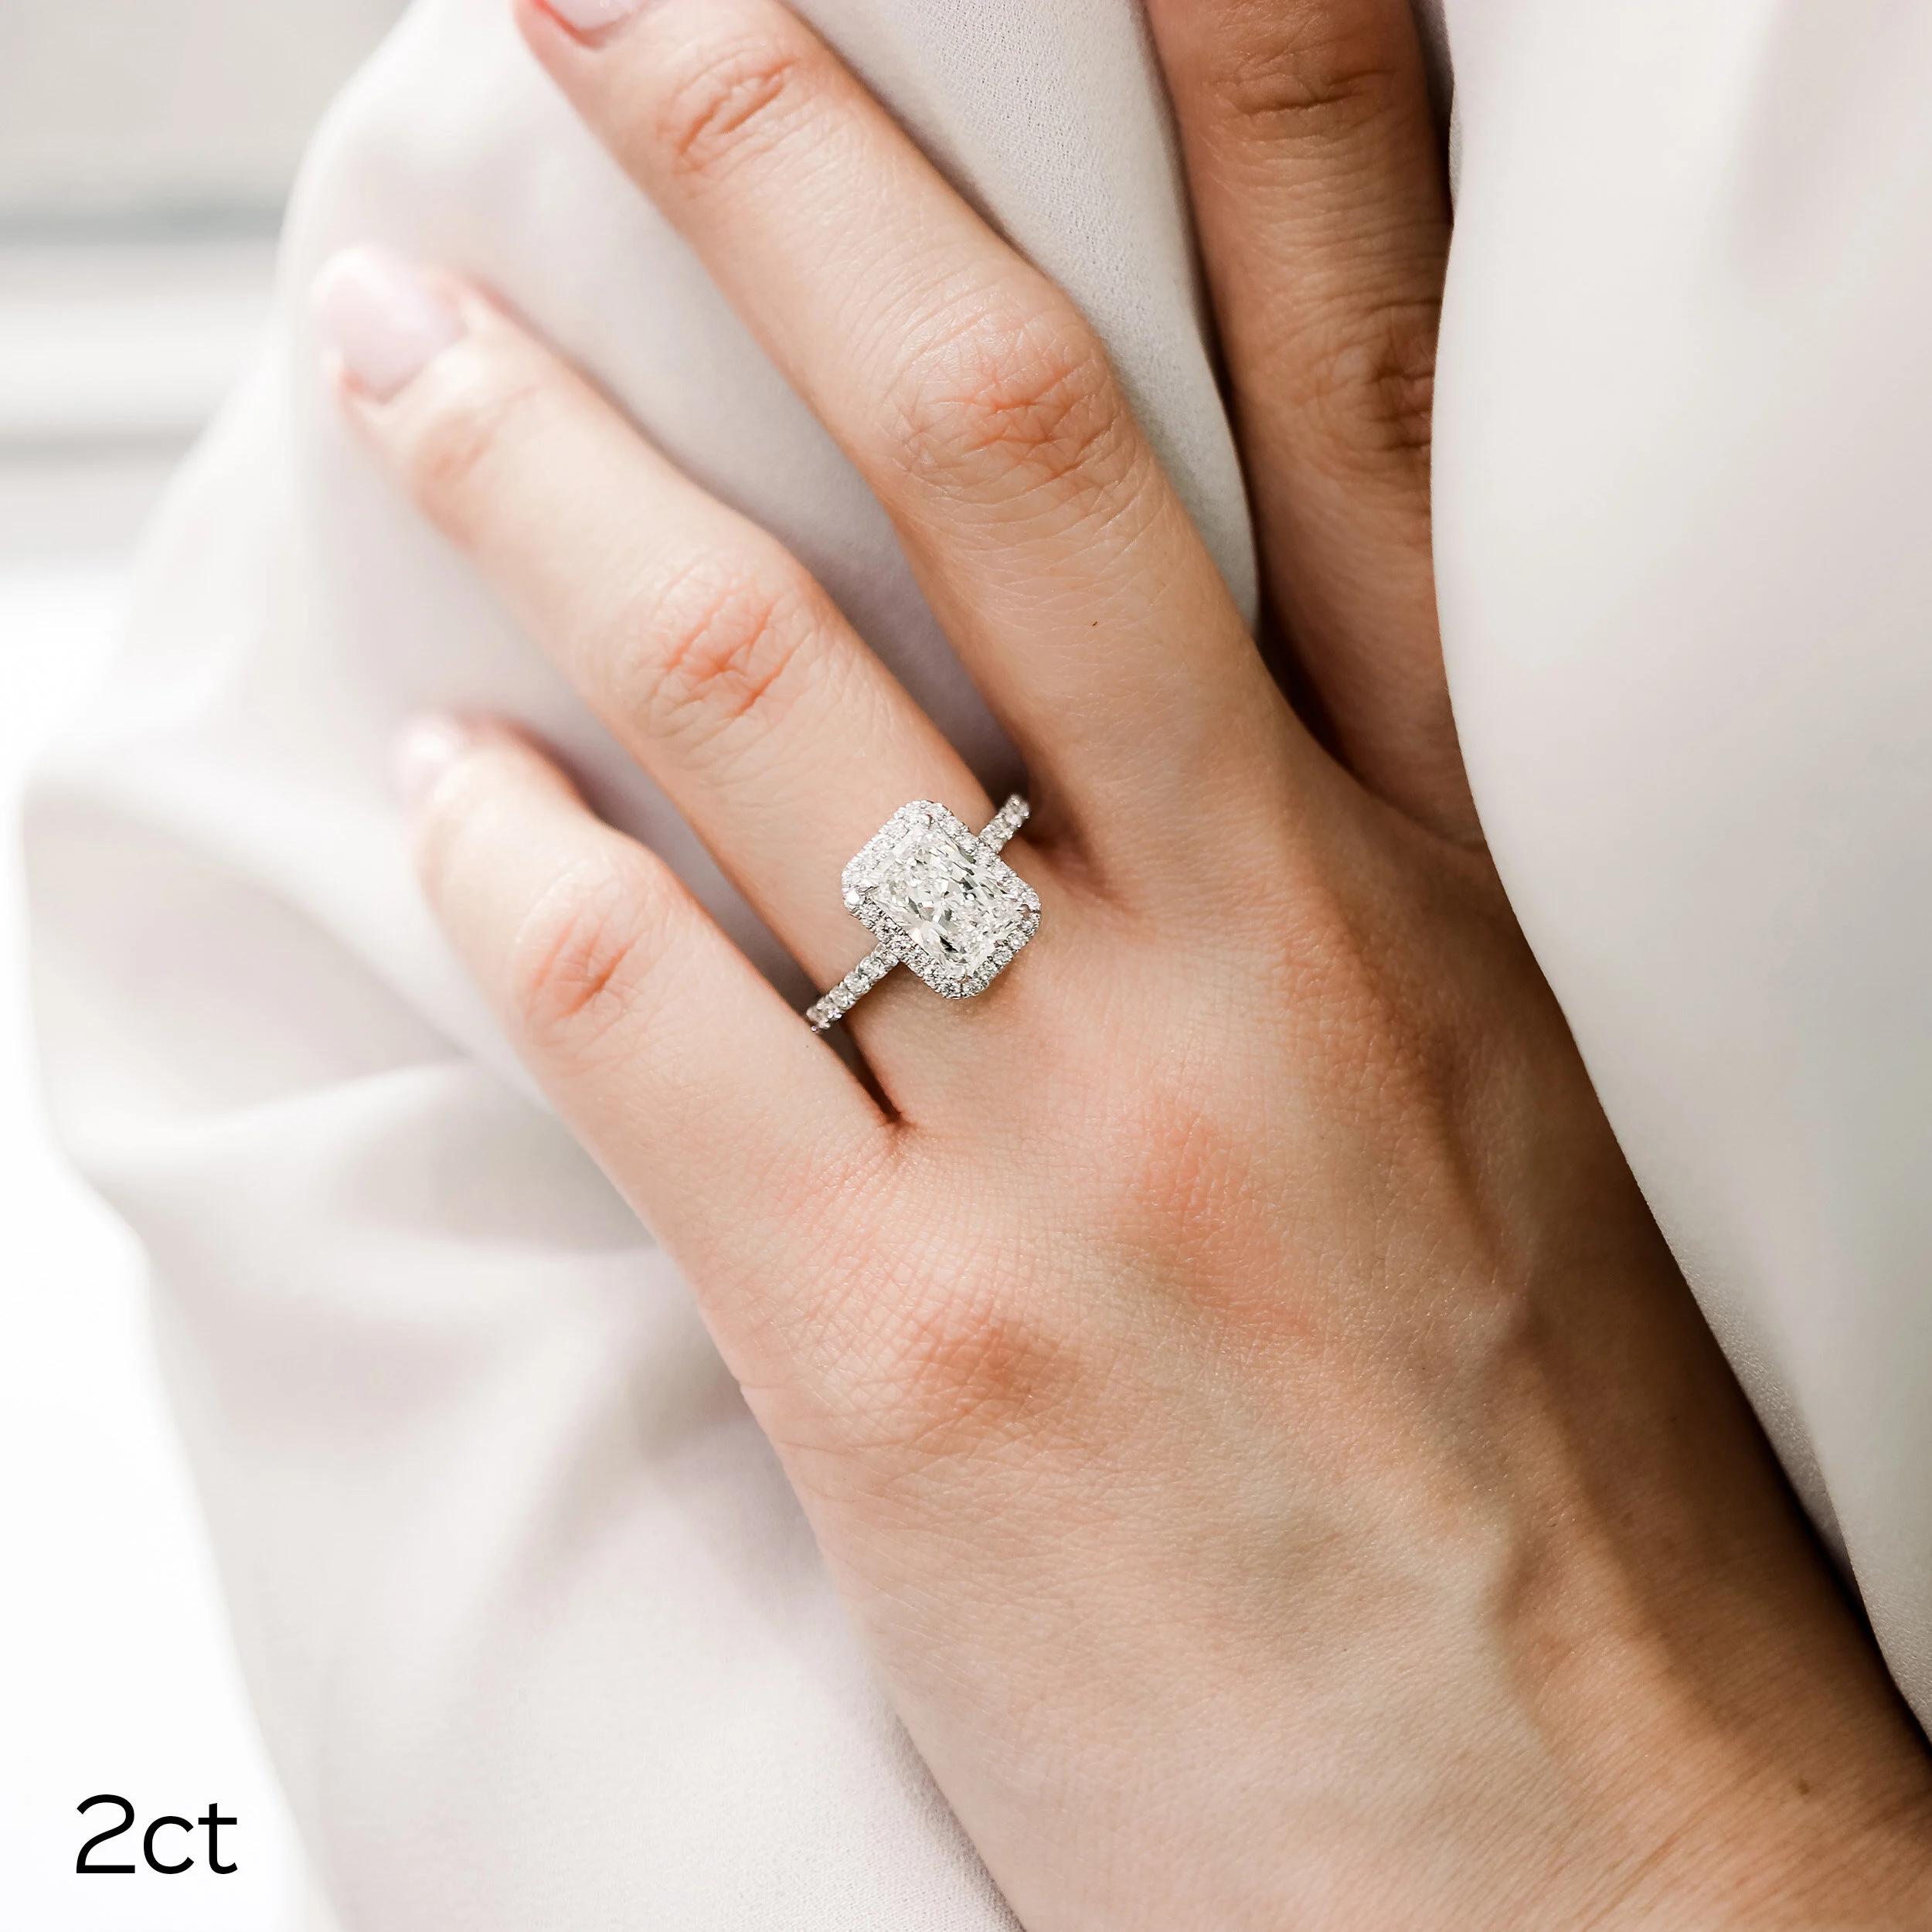 3 Carat Radiant Cut Lab Grown Diamond Ring with Halo and Diamond Band Ada Diamonds Design AD-445 on Model